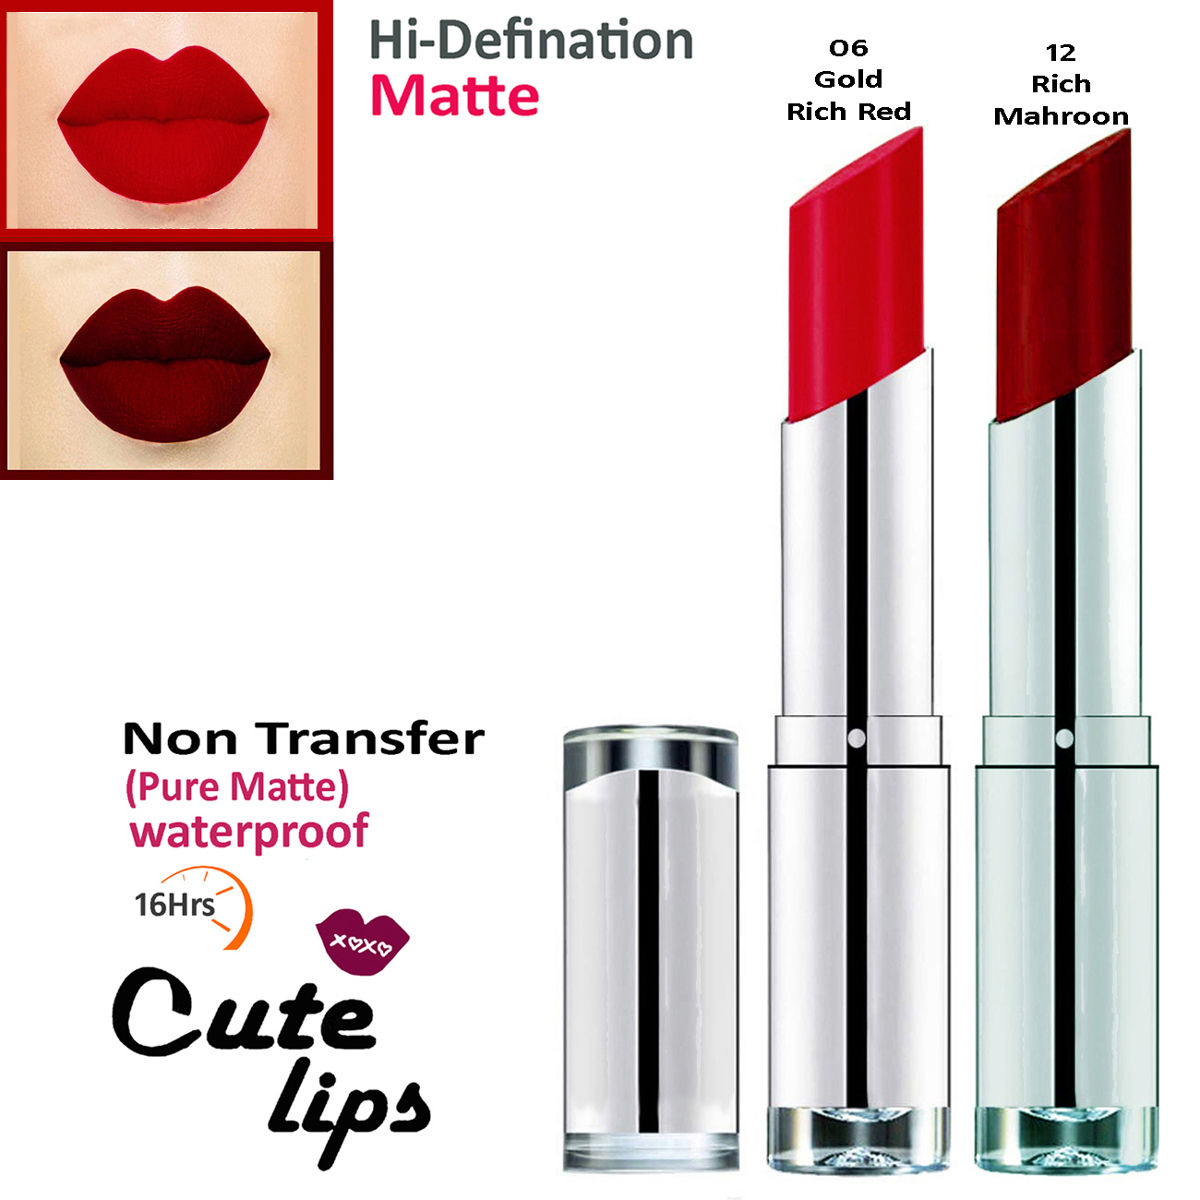 bq BLAQUE Cute Lips Non Transfer Matte Lipstick 2.4 gm each - 06 ...